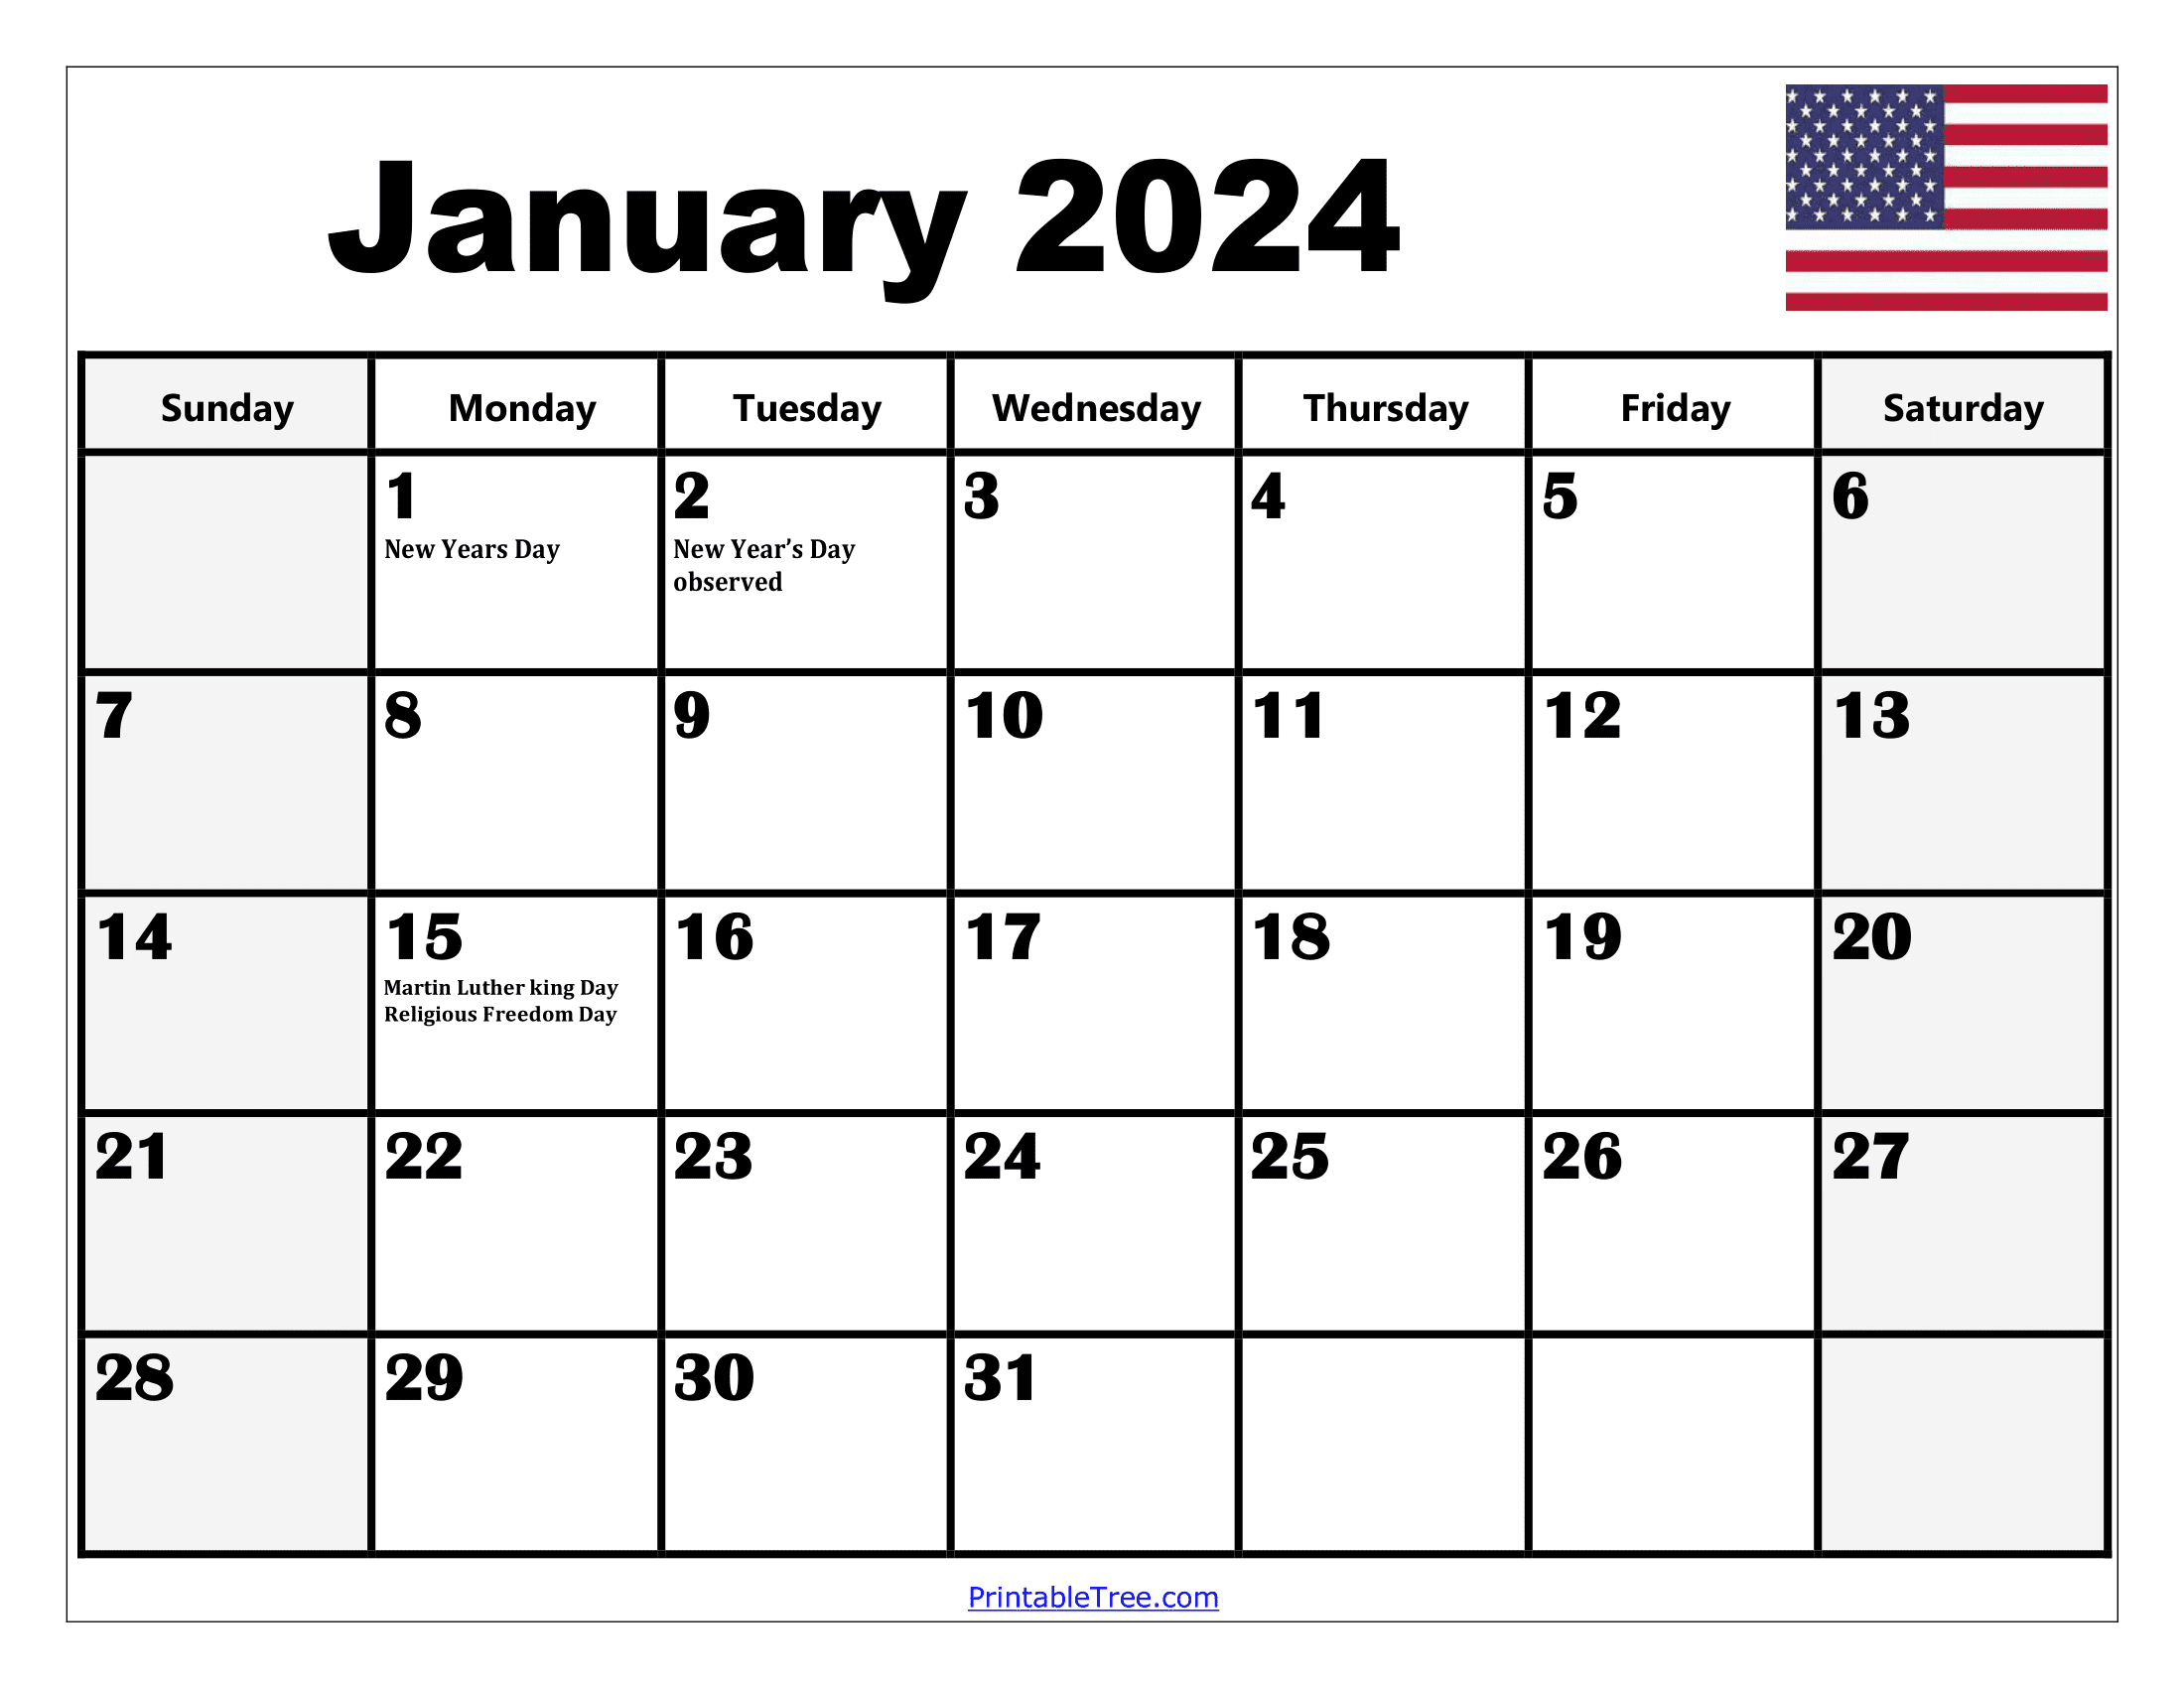 January 2024 Calendar with USA Holidays